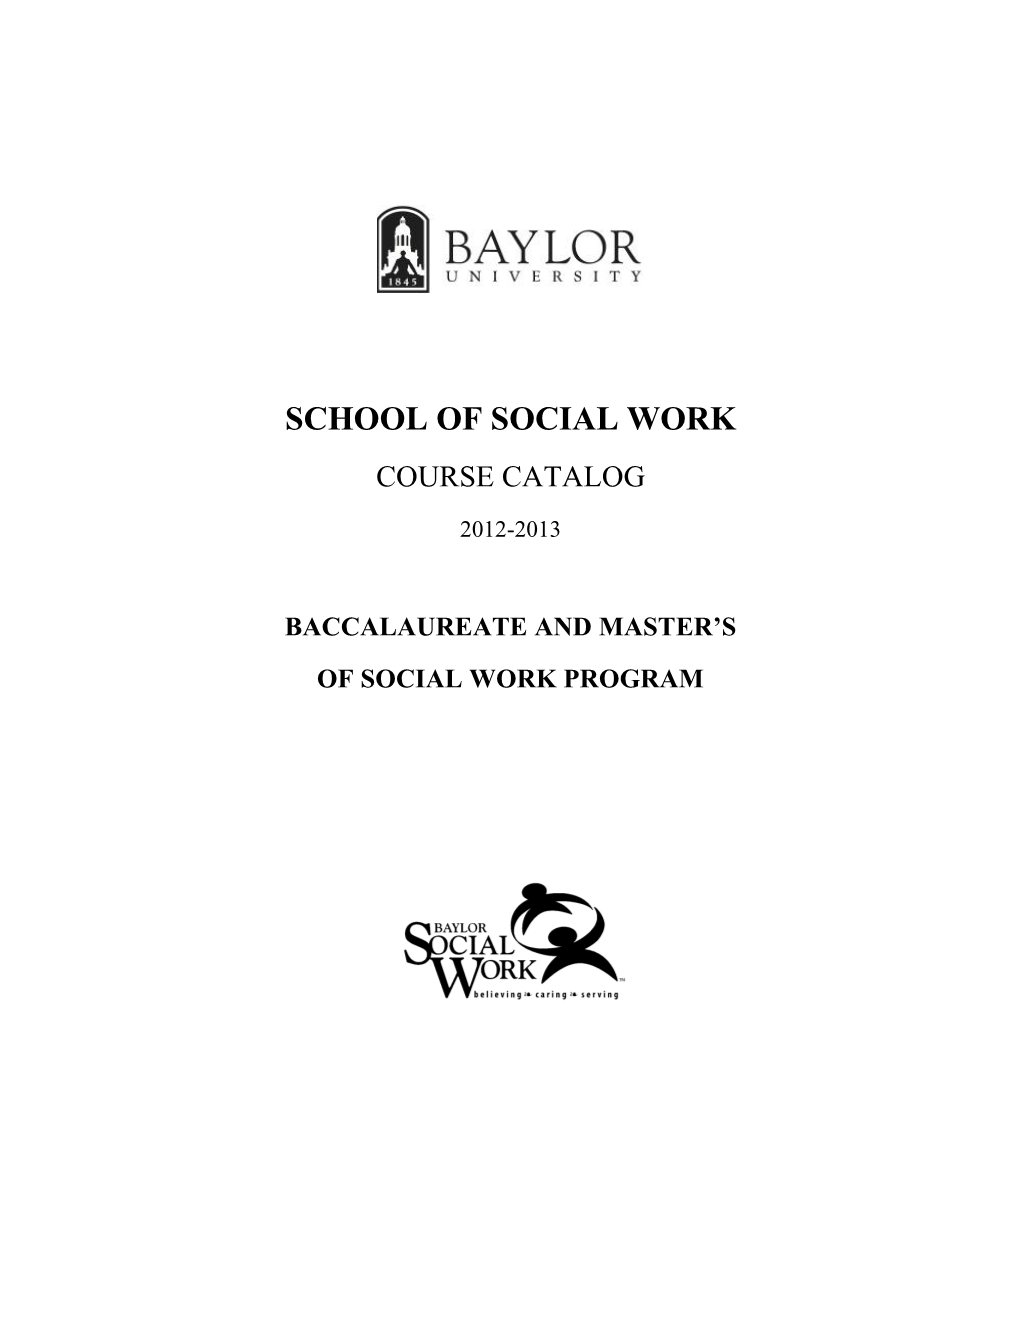 Catalog Revisions/Graduate Program